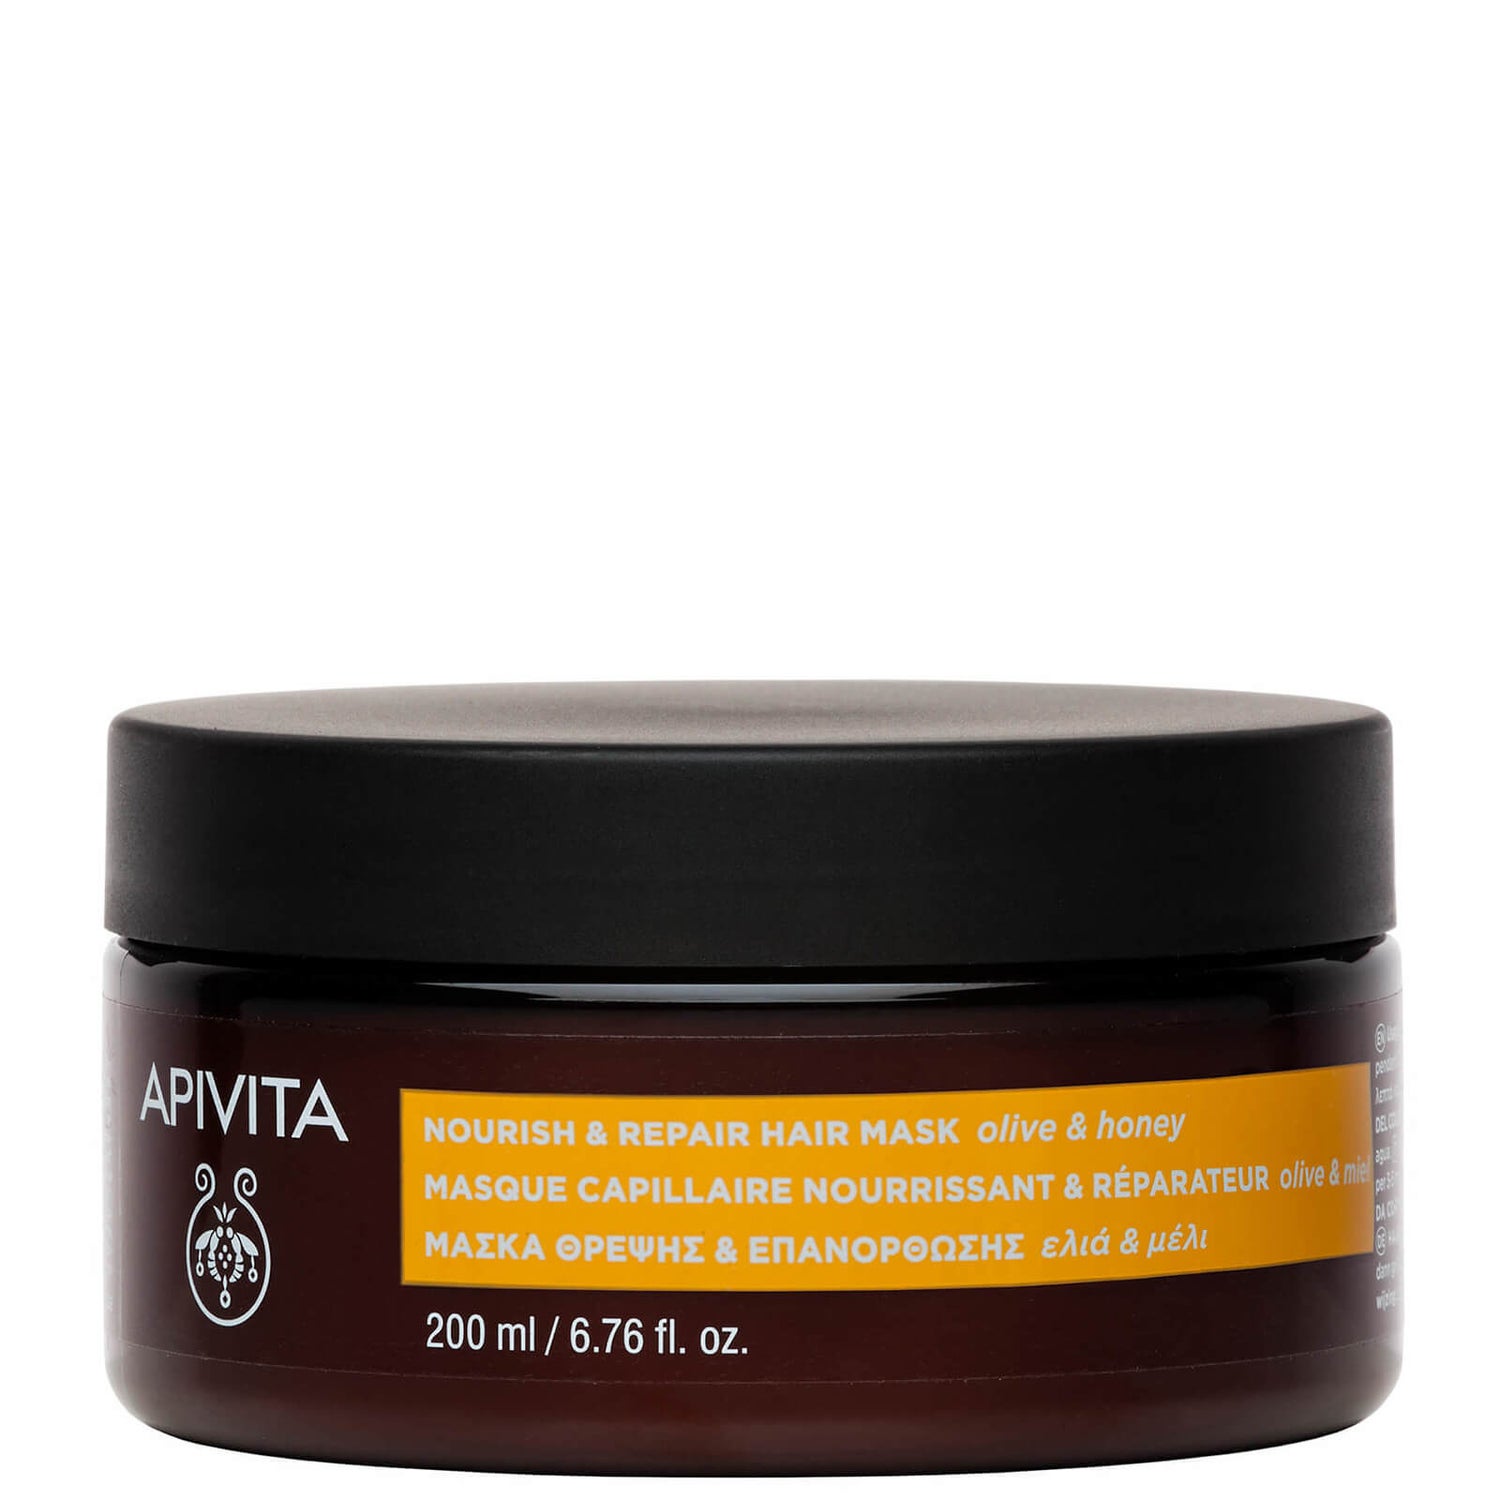 APIVITA Holistic Hair Care Nourish & Repair Hair Mask - Olive & Honey(아피비타 홀리스틱 헤어 케어 너리시 앤 리페어 헤어 마스크 - 올리브 앤 허니 200ml)